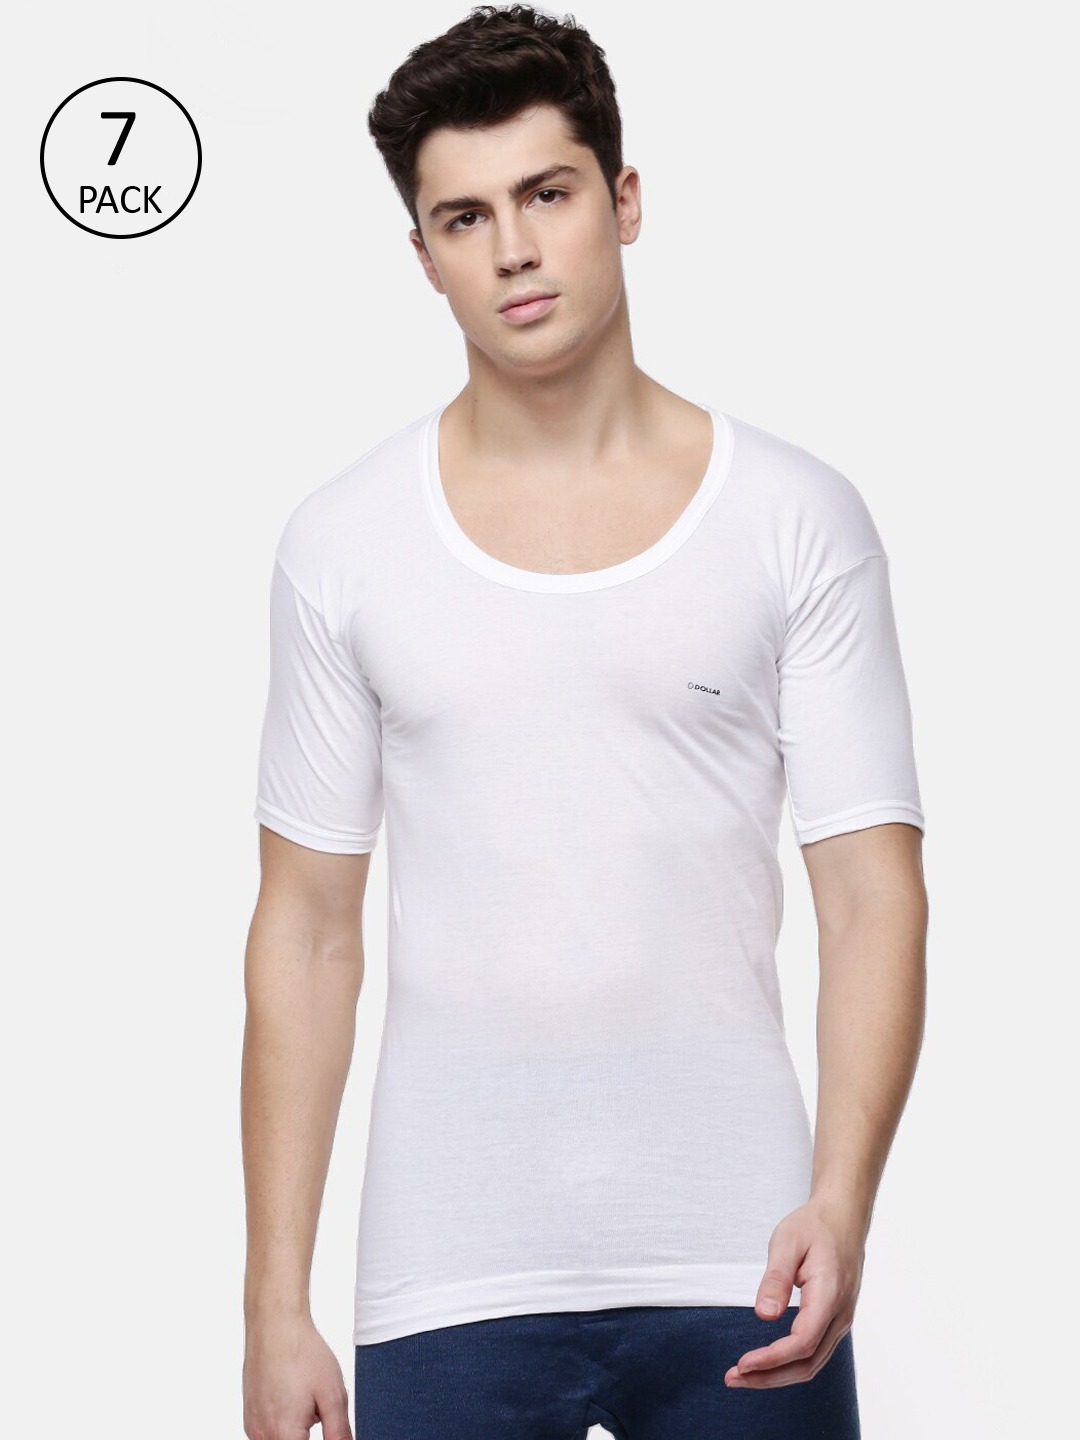 Clothing Innerwear Vests | Dollar Men Pack Of 7 White Solid Innerwear Vests MLHVE-02-PO7 - IB96688